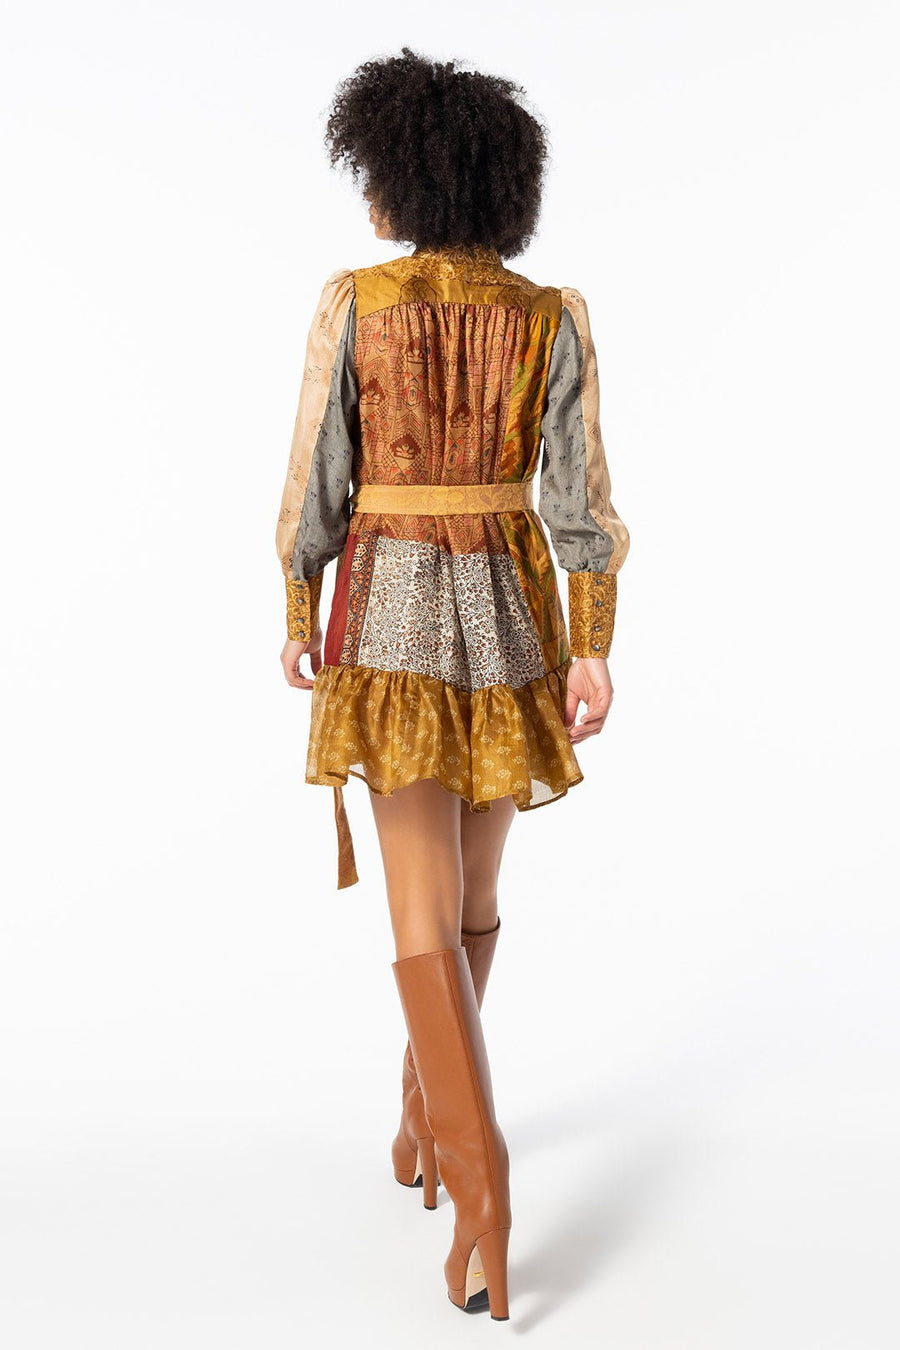 ASHBURY UPCYCLED SARI SHIRTDRESS DRESS, MULTI - Burning Torch Online Boutique